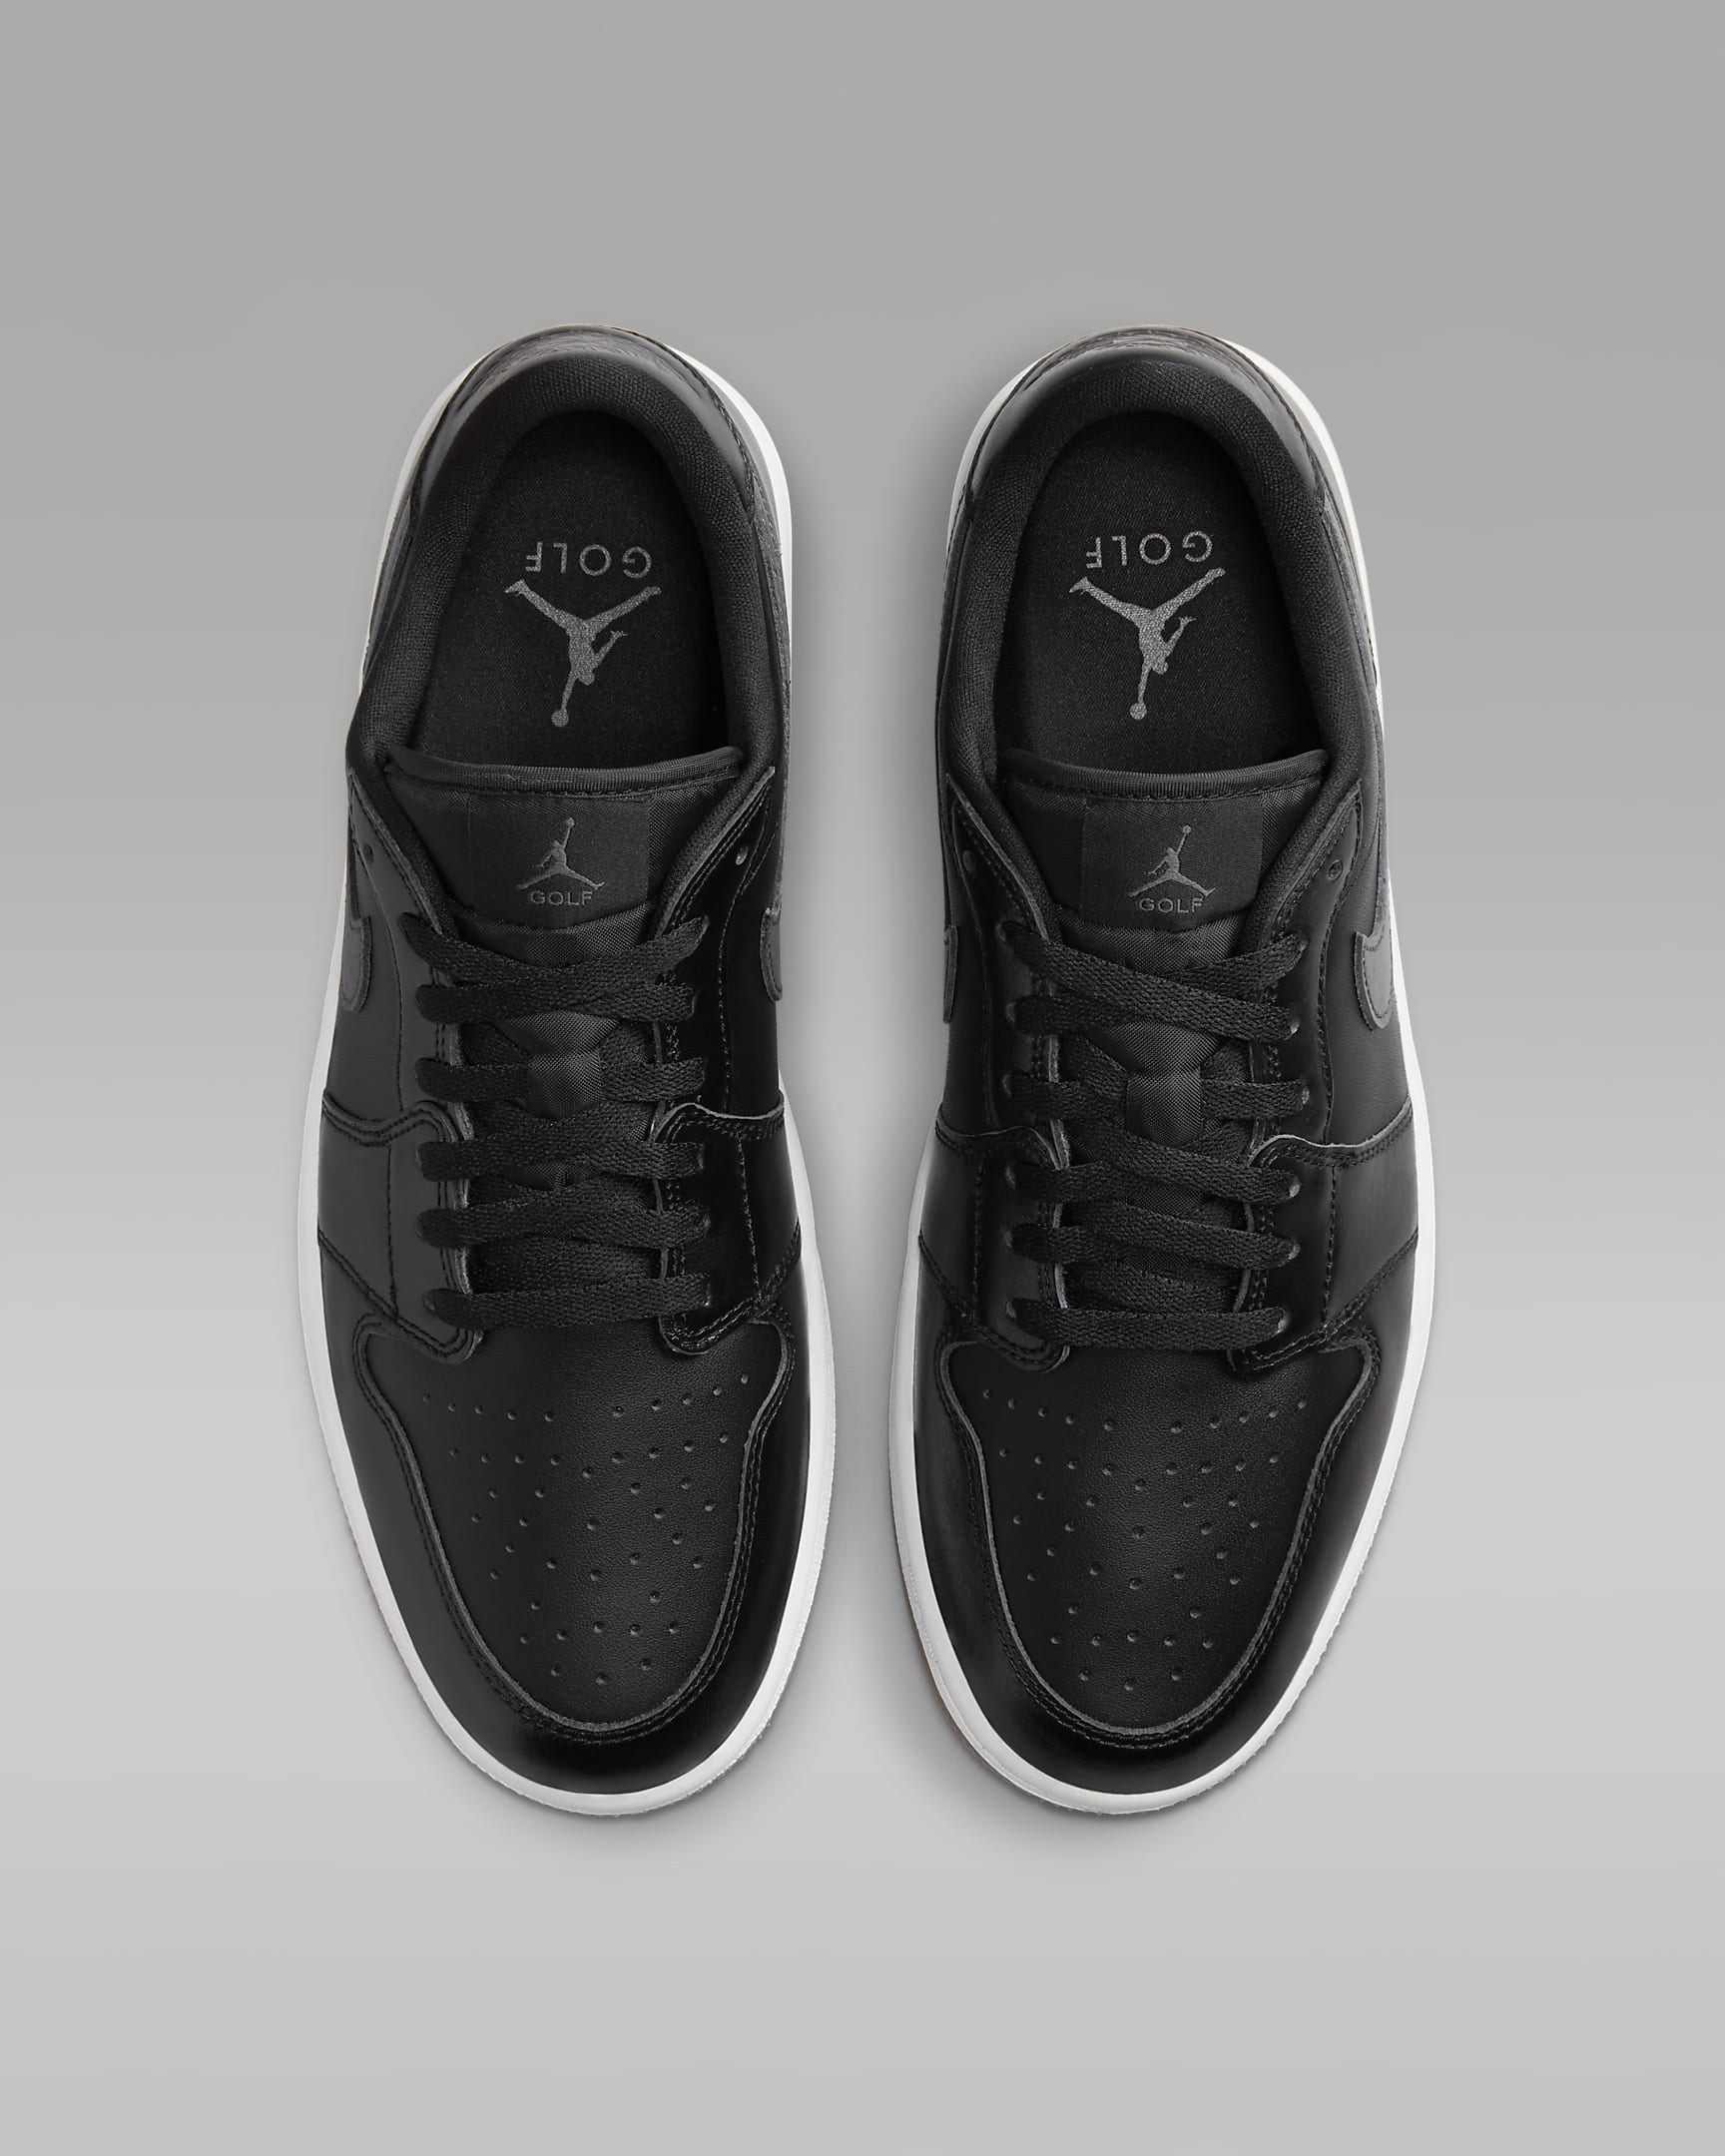 Air Jordan 1 Low G Golf Shoes - Black/Gum Medium Brown/White/Anthracite